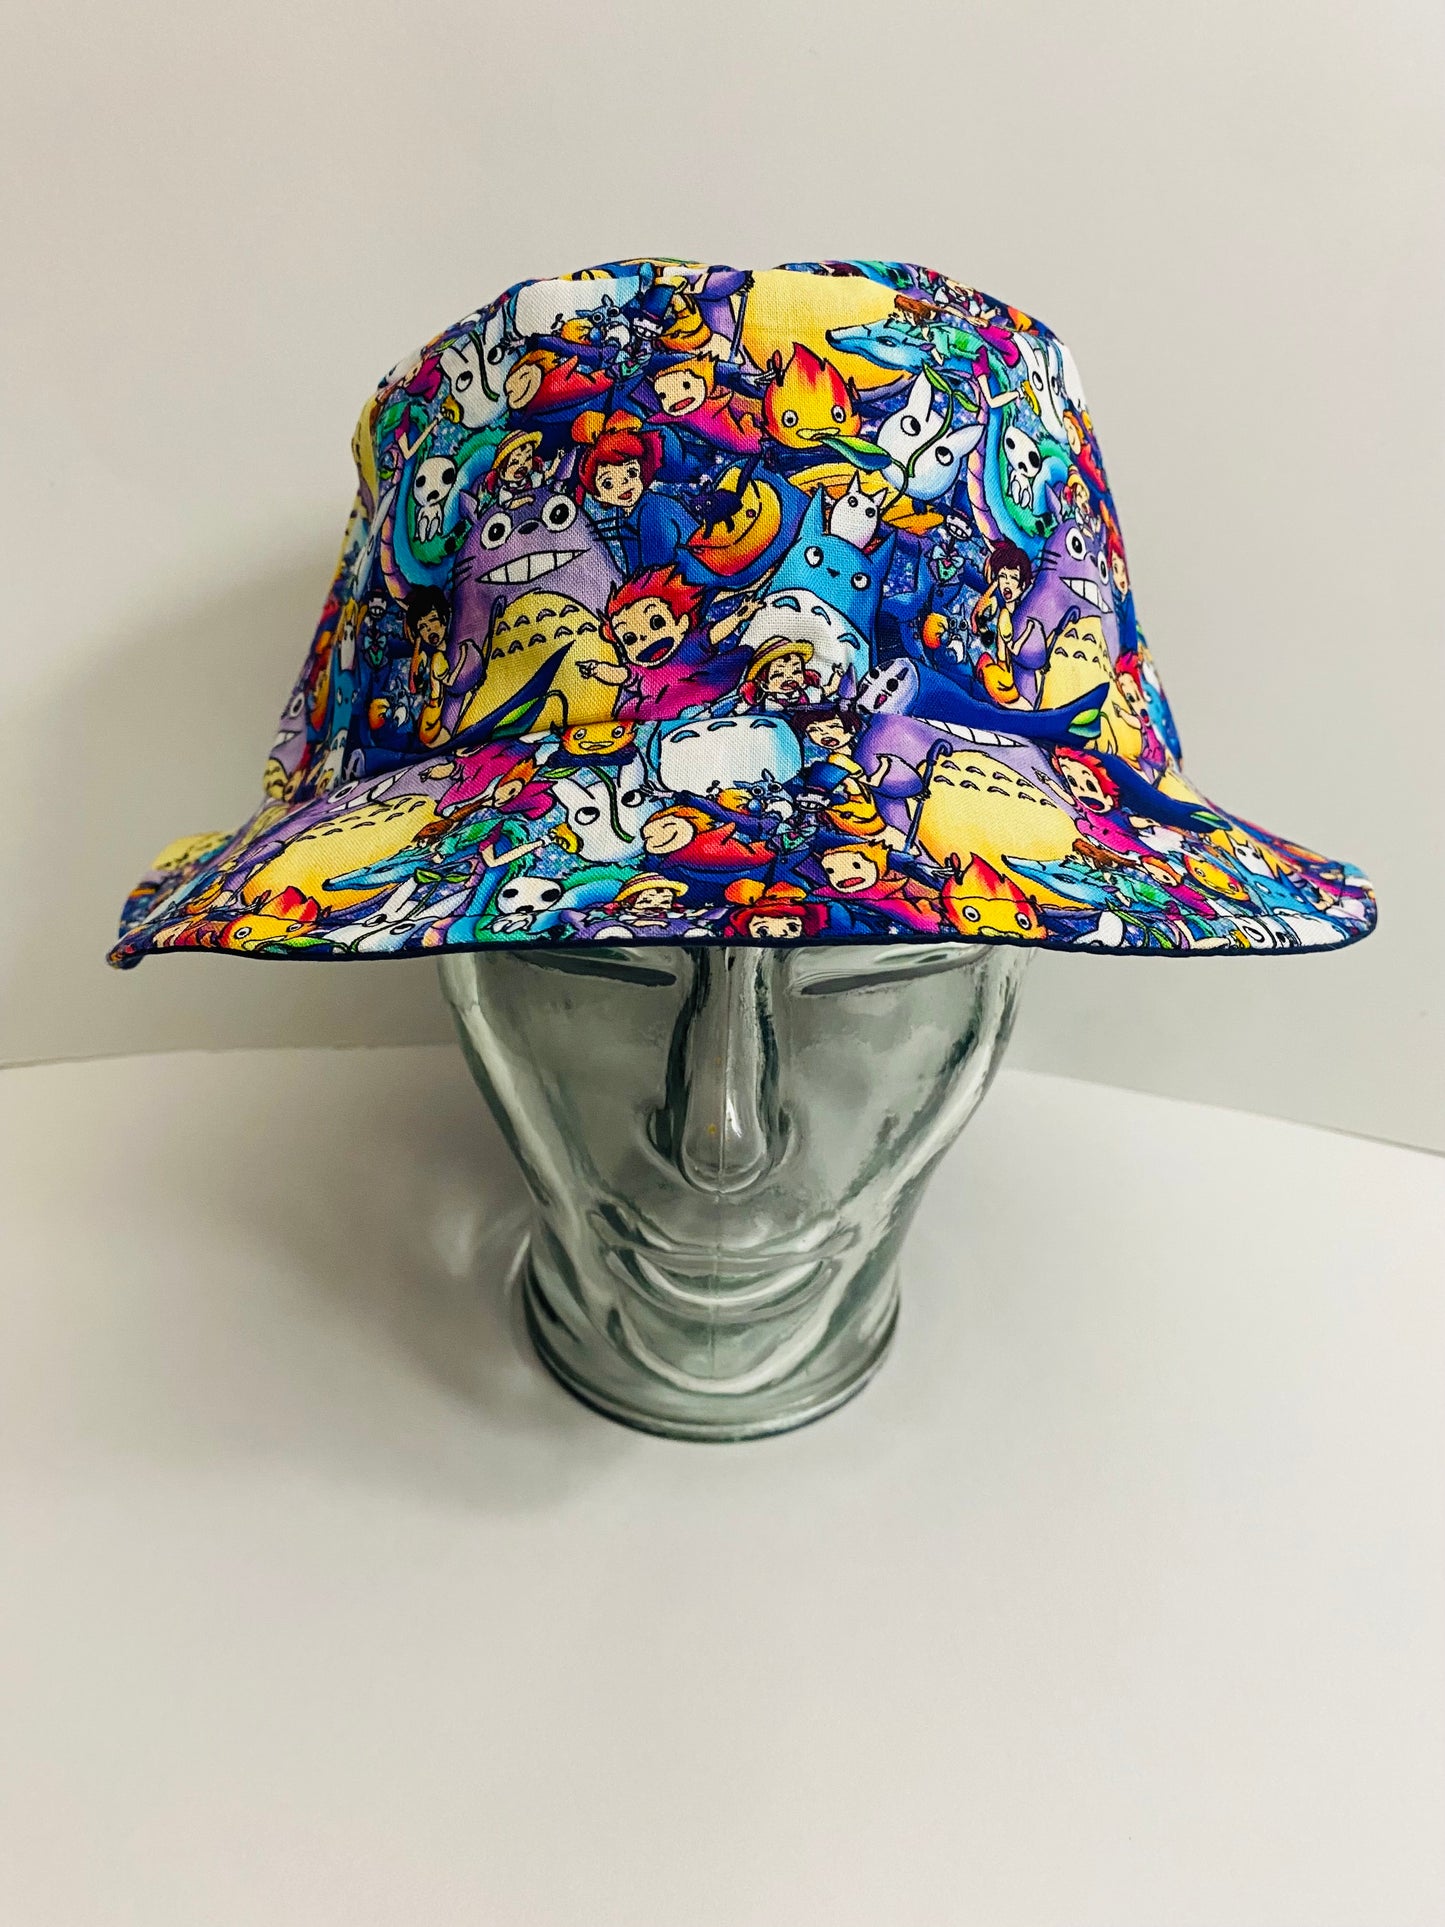 Totoro studio ghibli bucket hat